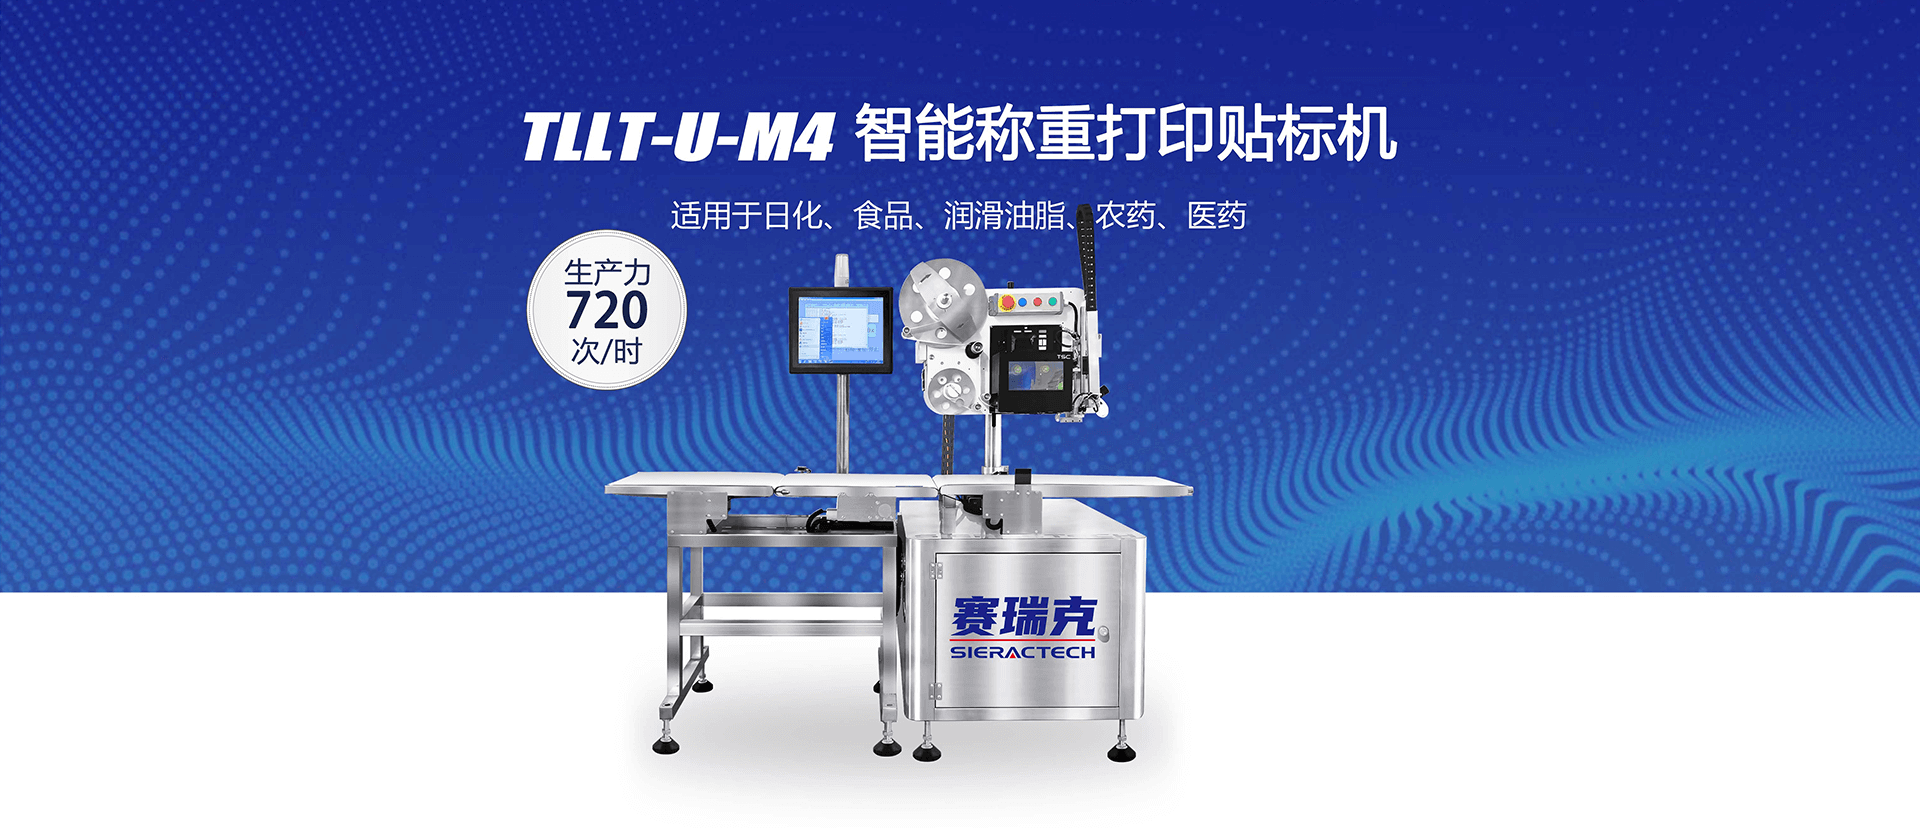 TLLT-U-M4智能称重打印贴标机